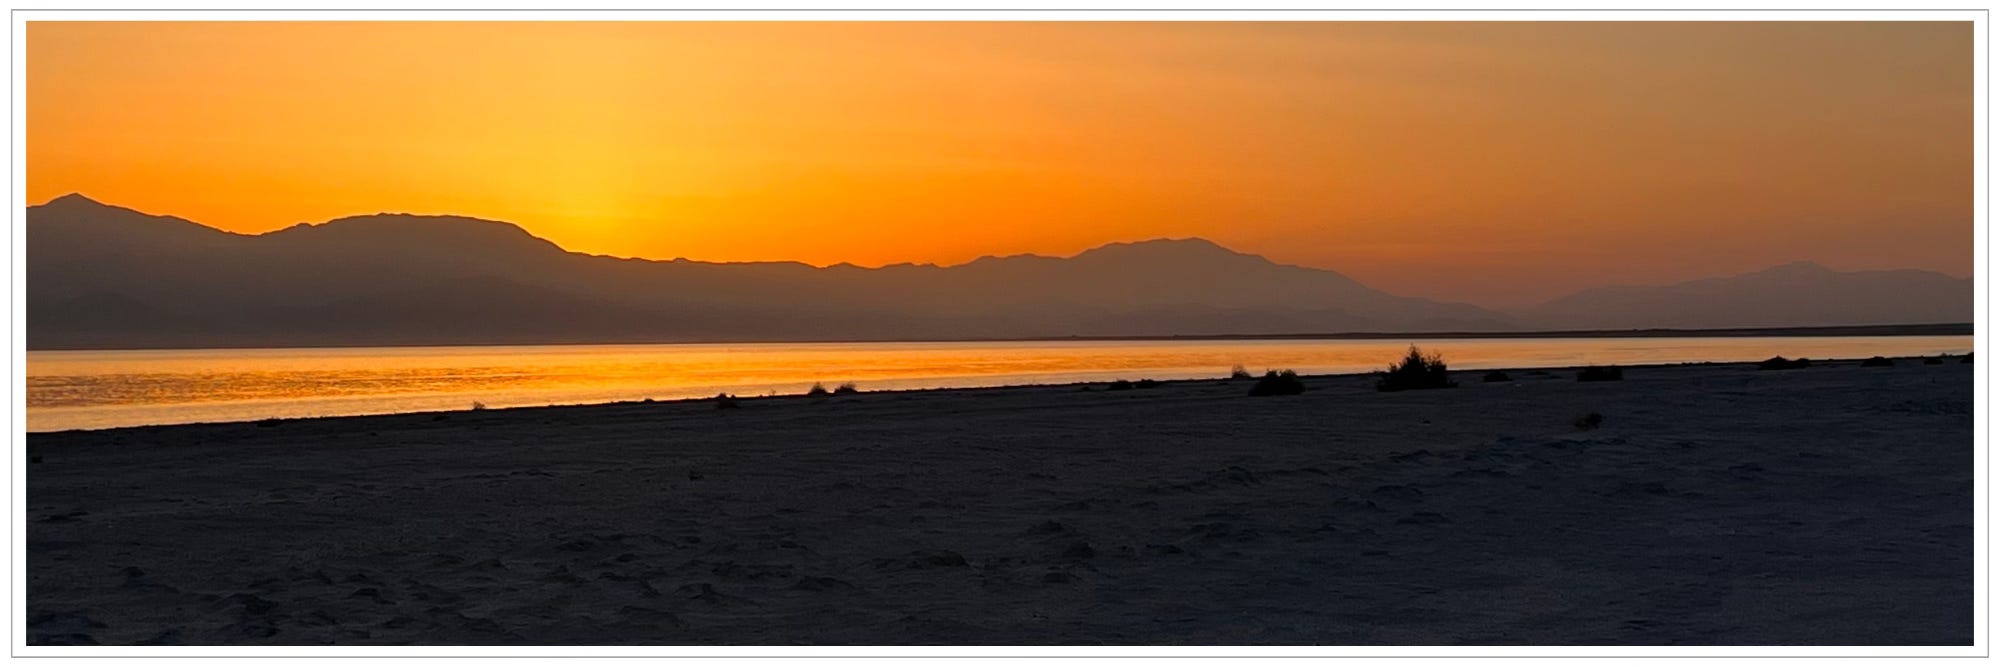 sunset heat haze, Salton Sea shoreline